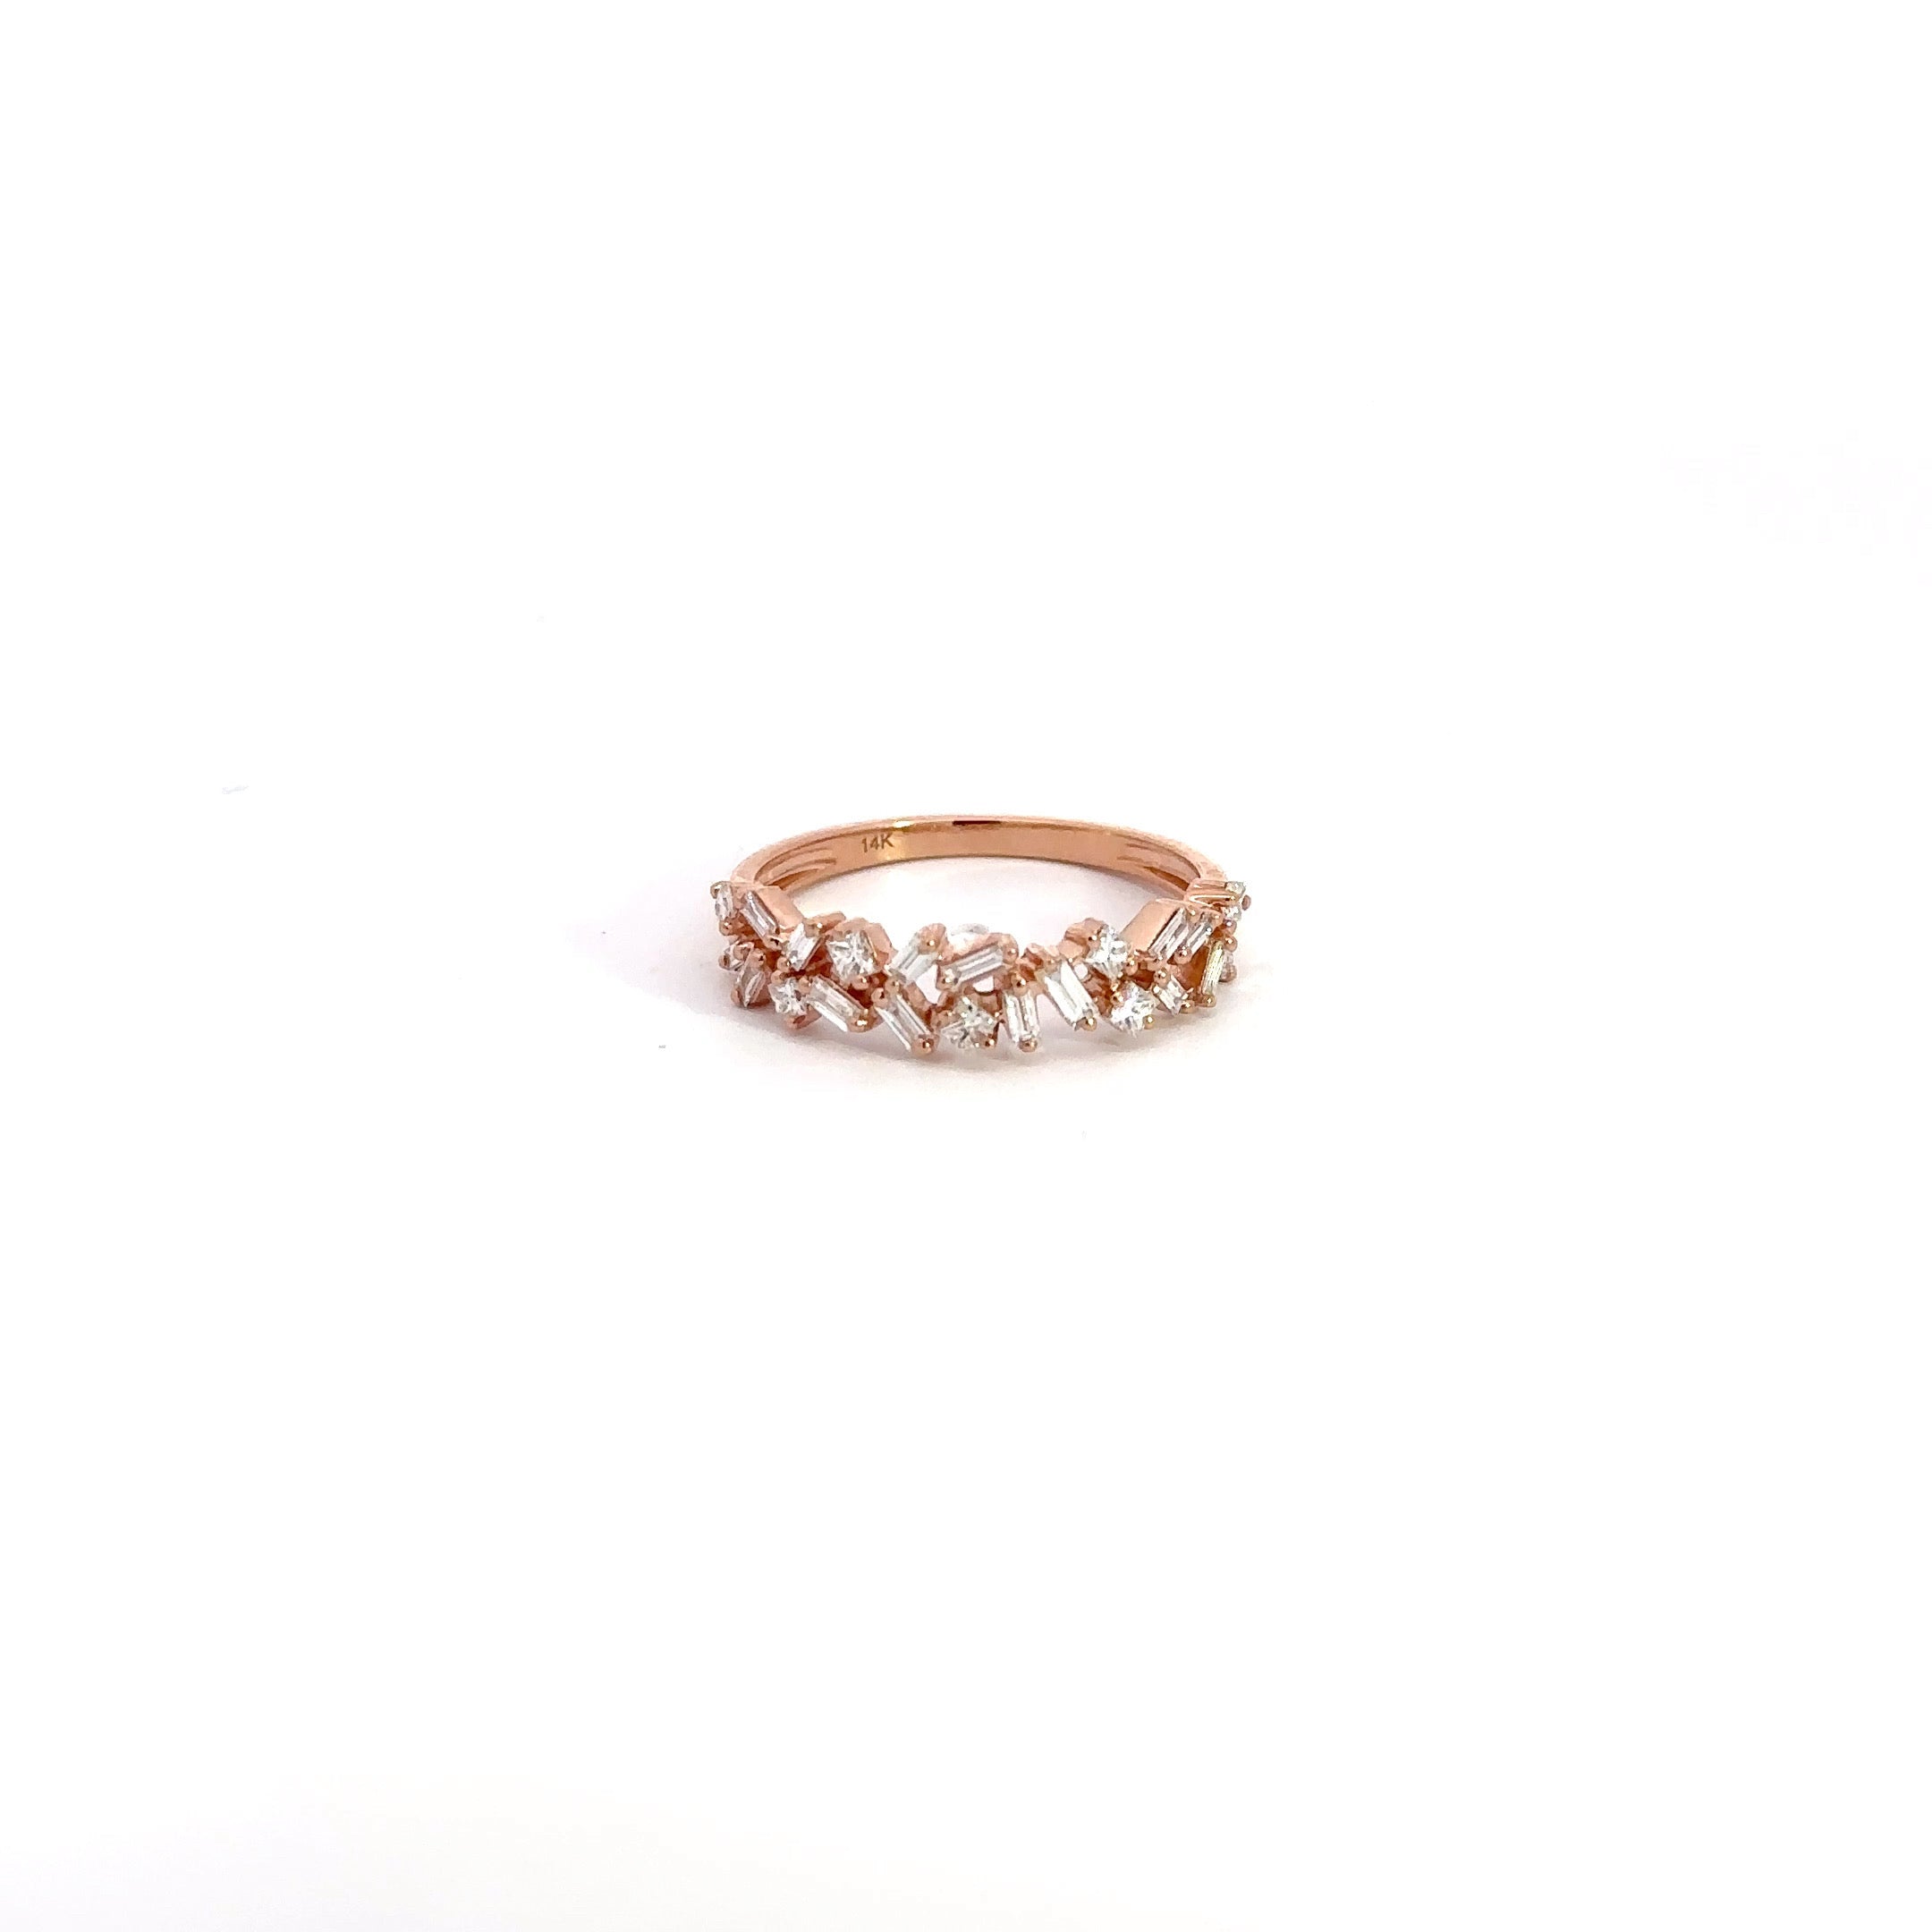 WD1194 14kt baquette diamond ring